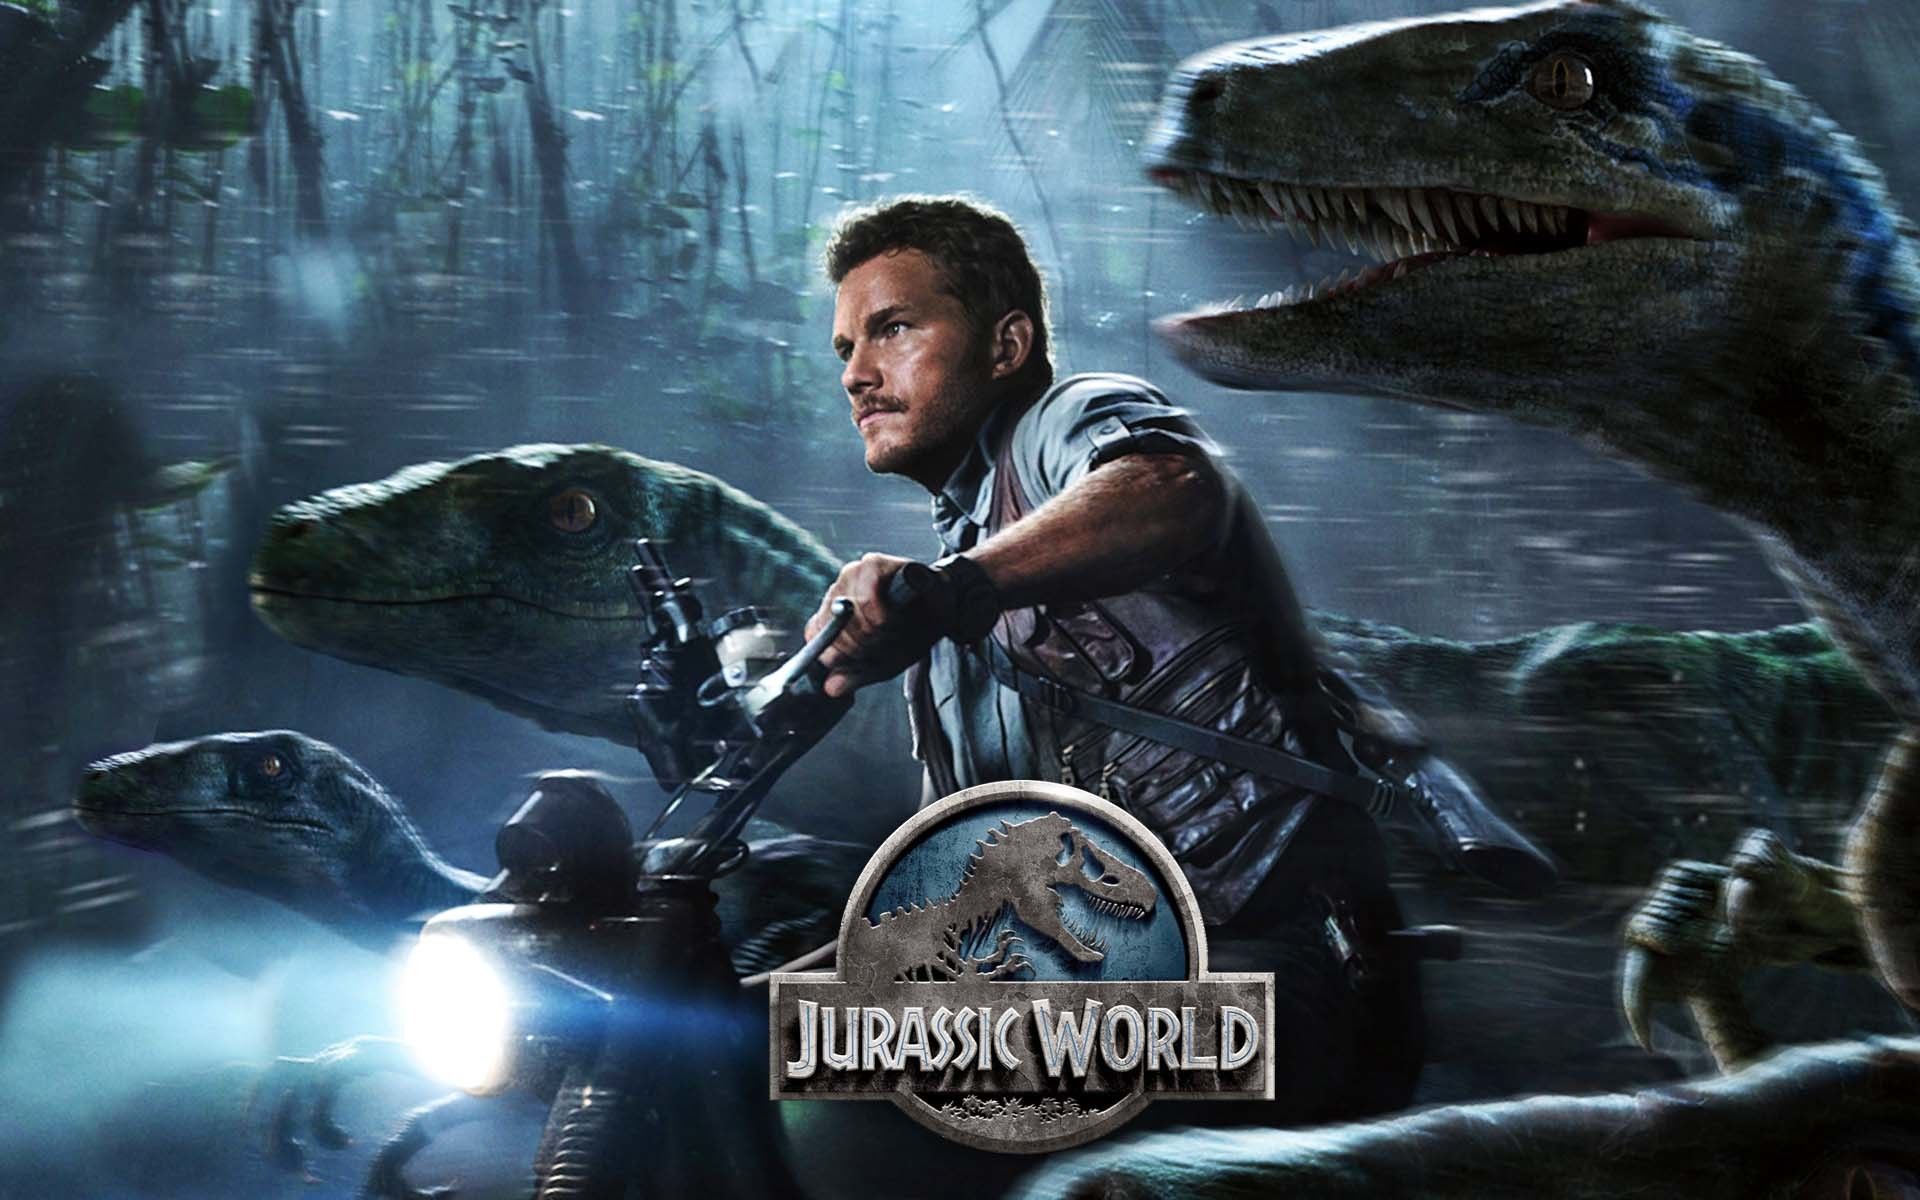 Chris Pratt Jurassic World Wallpaper Free Chris Pratt Jurassic World Background